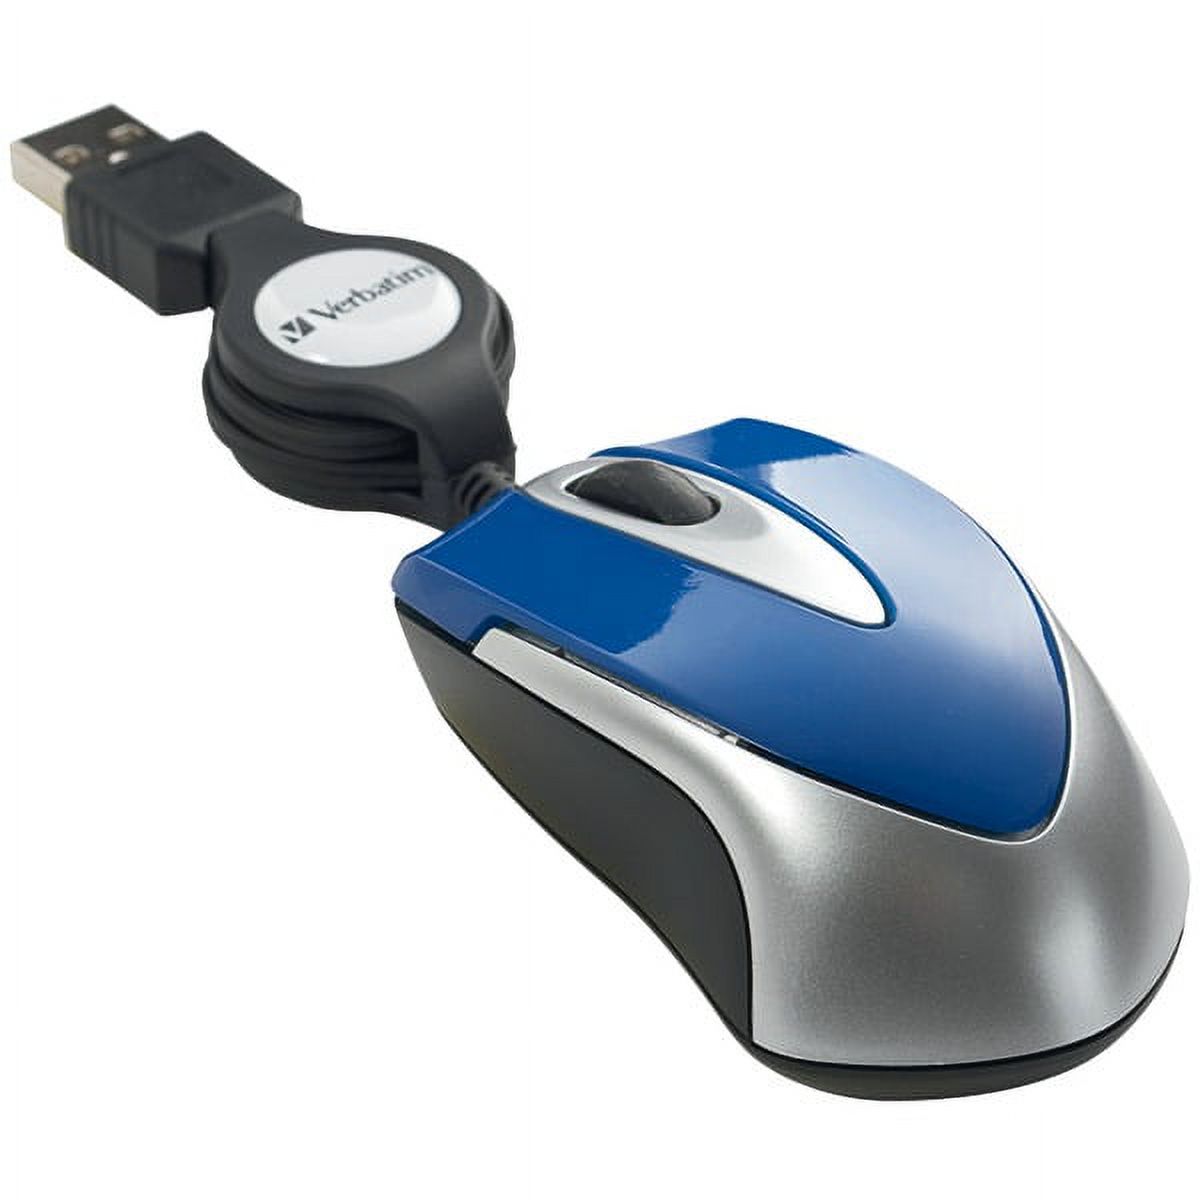 Verbatim Optical Mini Travel Mouse (blue) - image 1 of 2